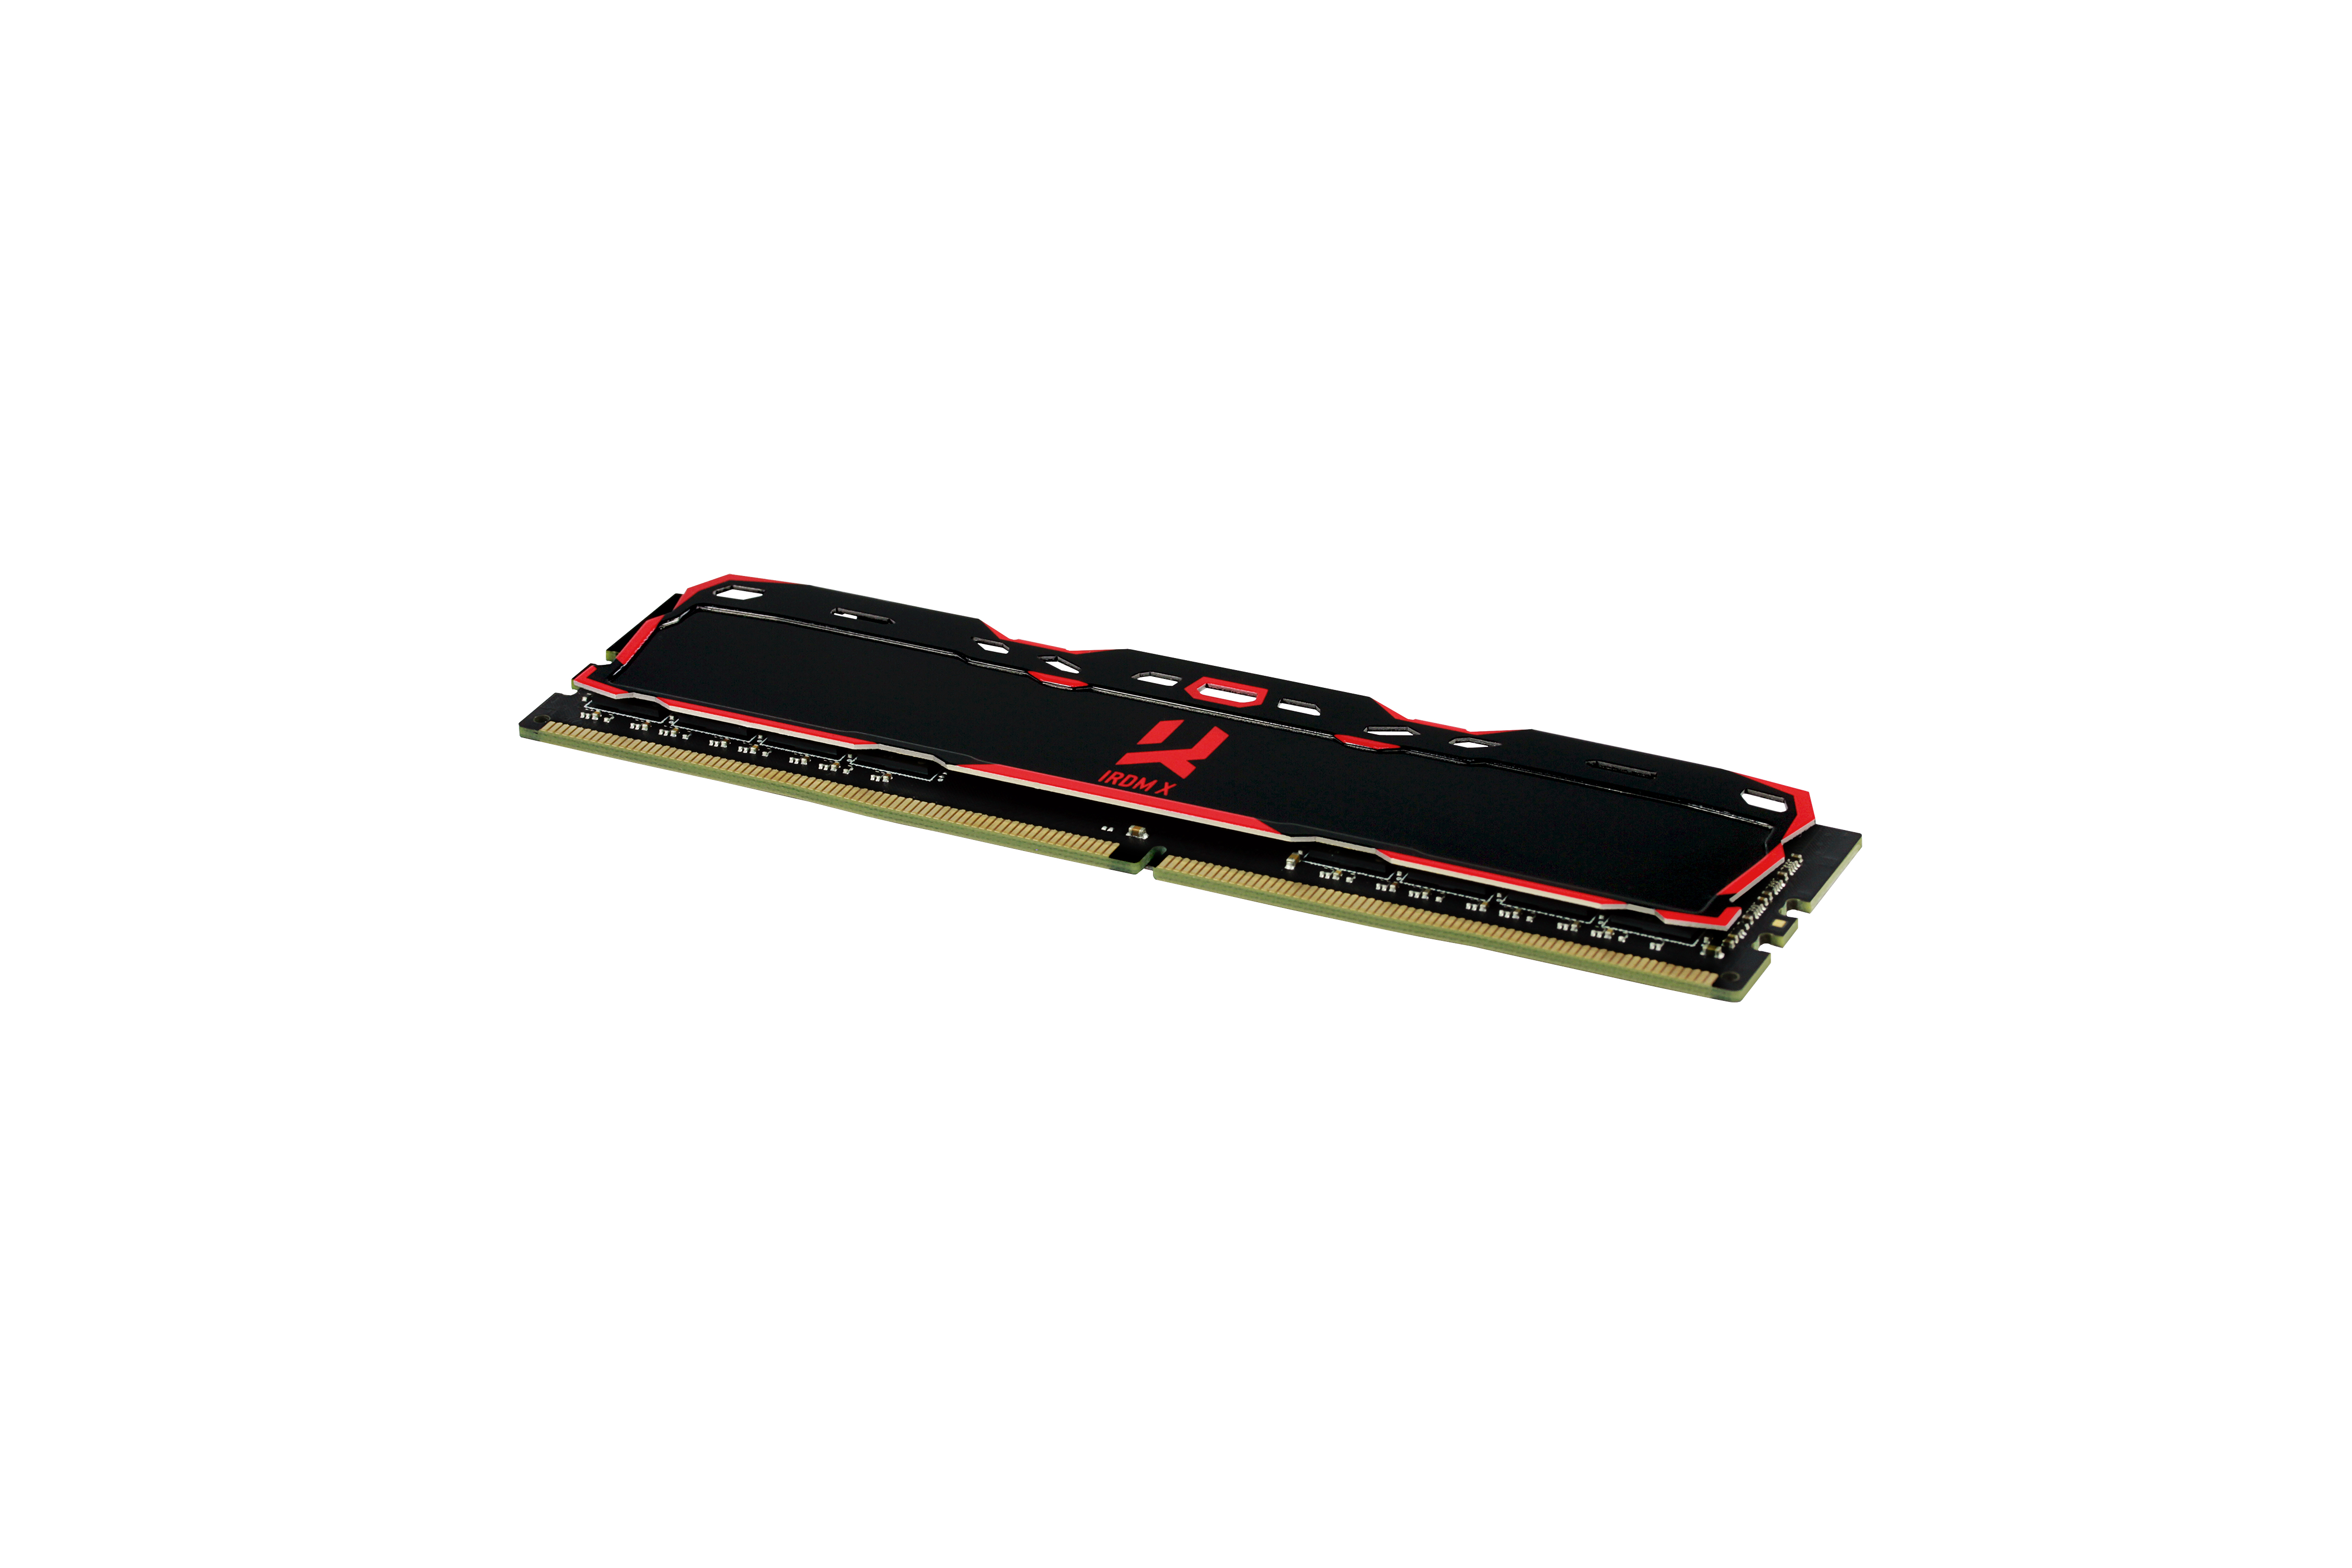 GOODRAM IRDM-X DDR4 DIMM 8GB 3200MHz CL16 (16-20-20), 1.20 - 1.35 V, Black heatspreader with red logo